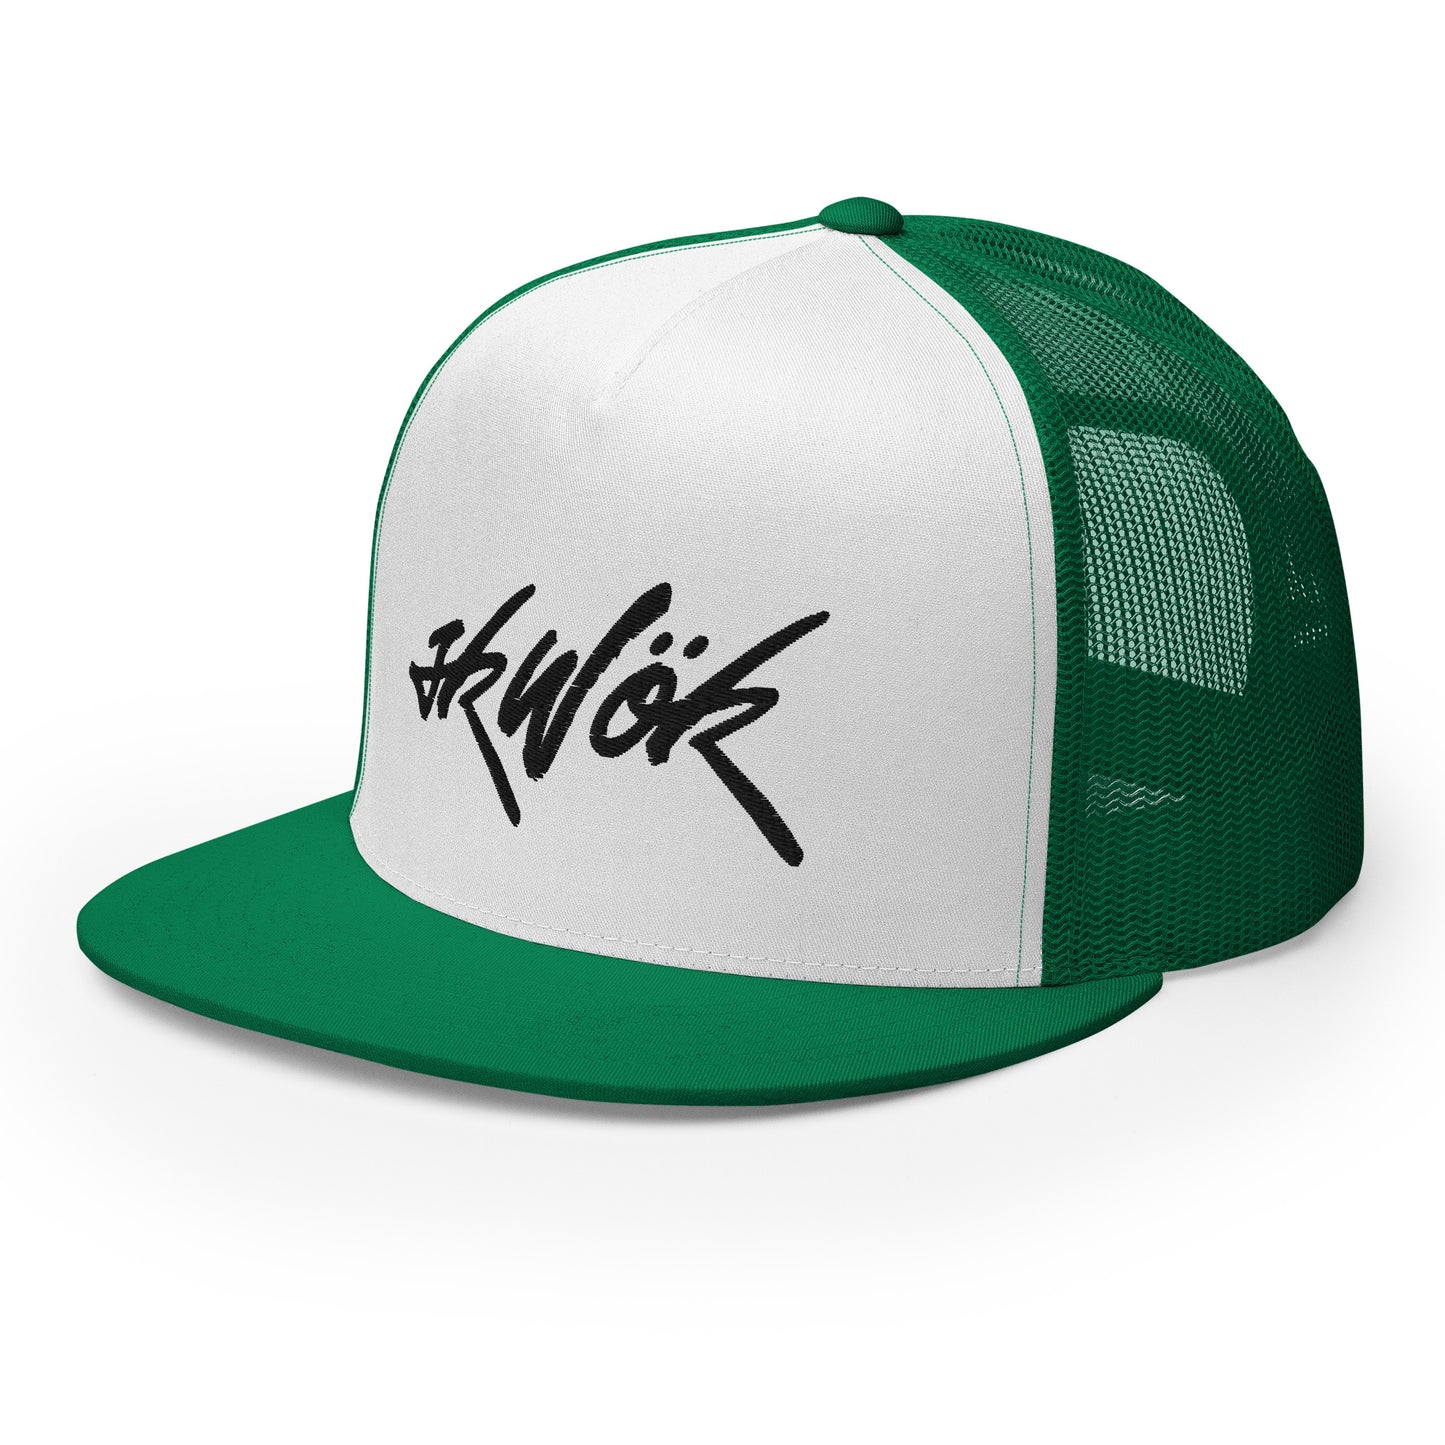 Skwok Brand / Hat / Trucker Cap / Tag Logo / 3D Puff / Black